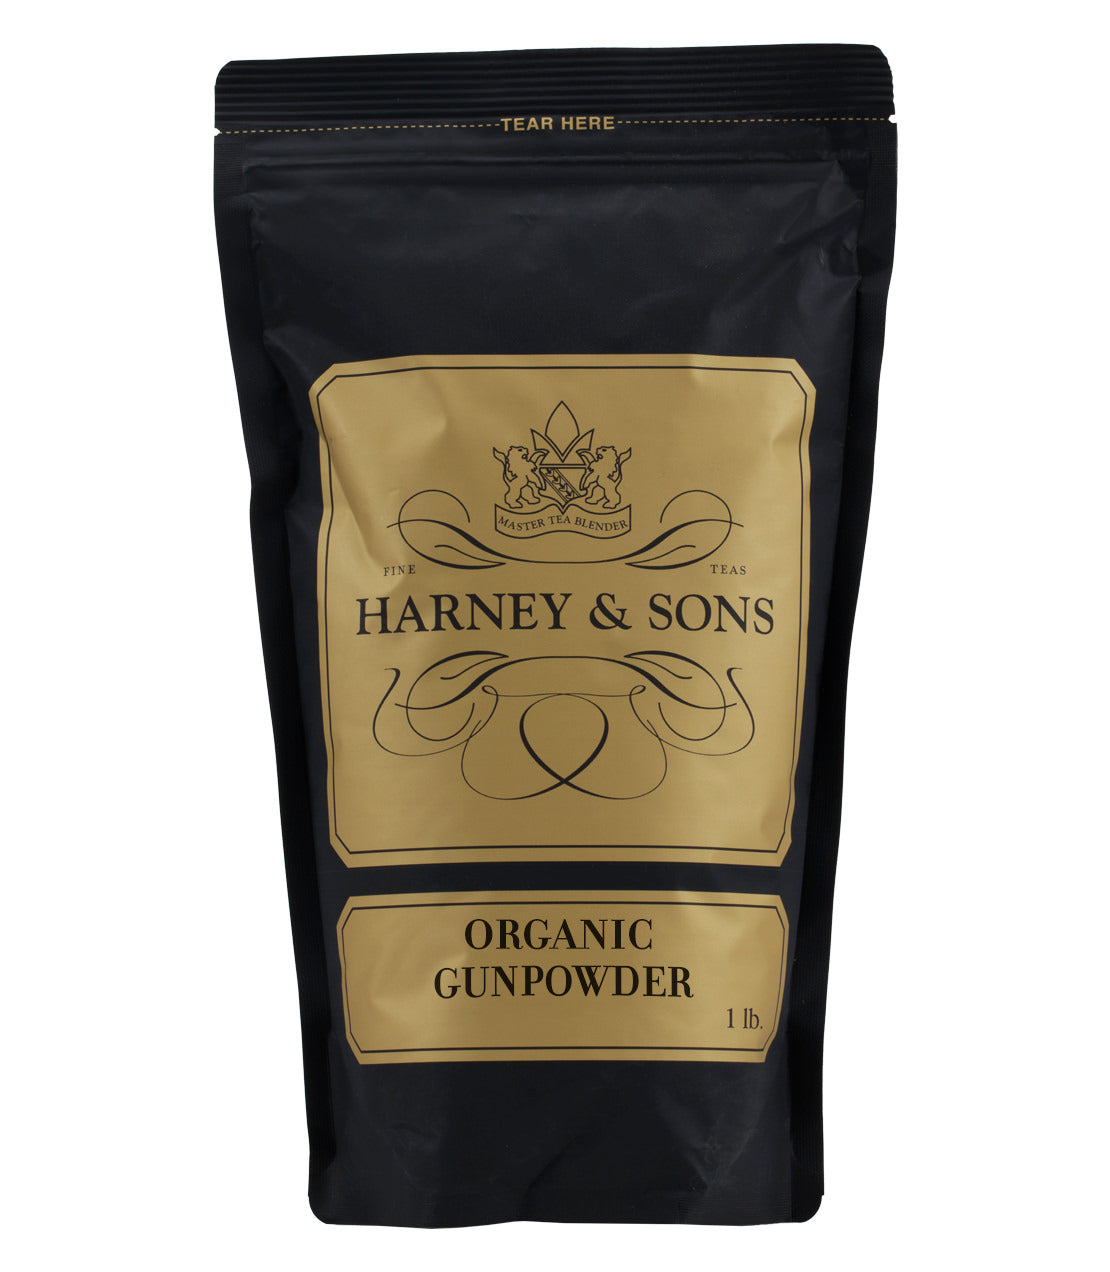 Organic Gunpowder - Loose 1 lb. Bag - Harney & Sons Fine Teas